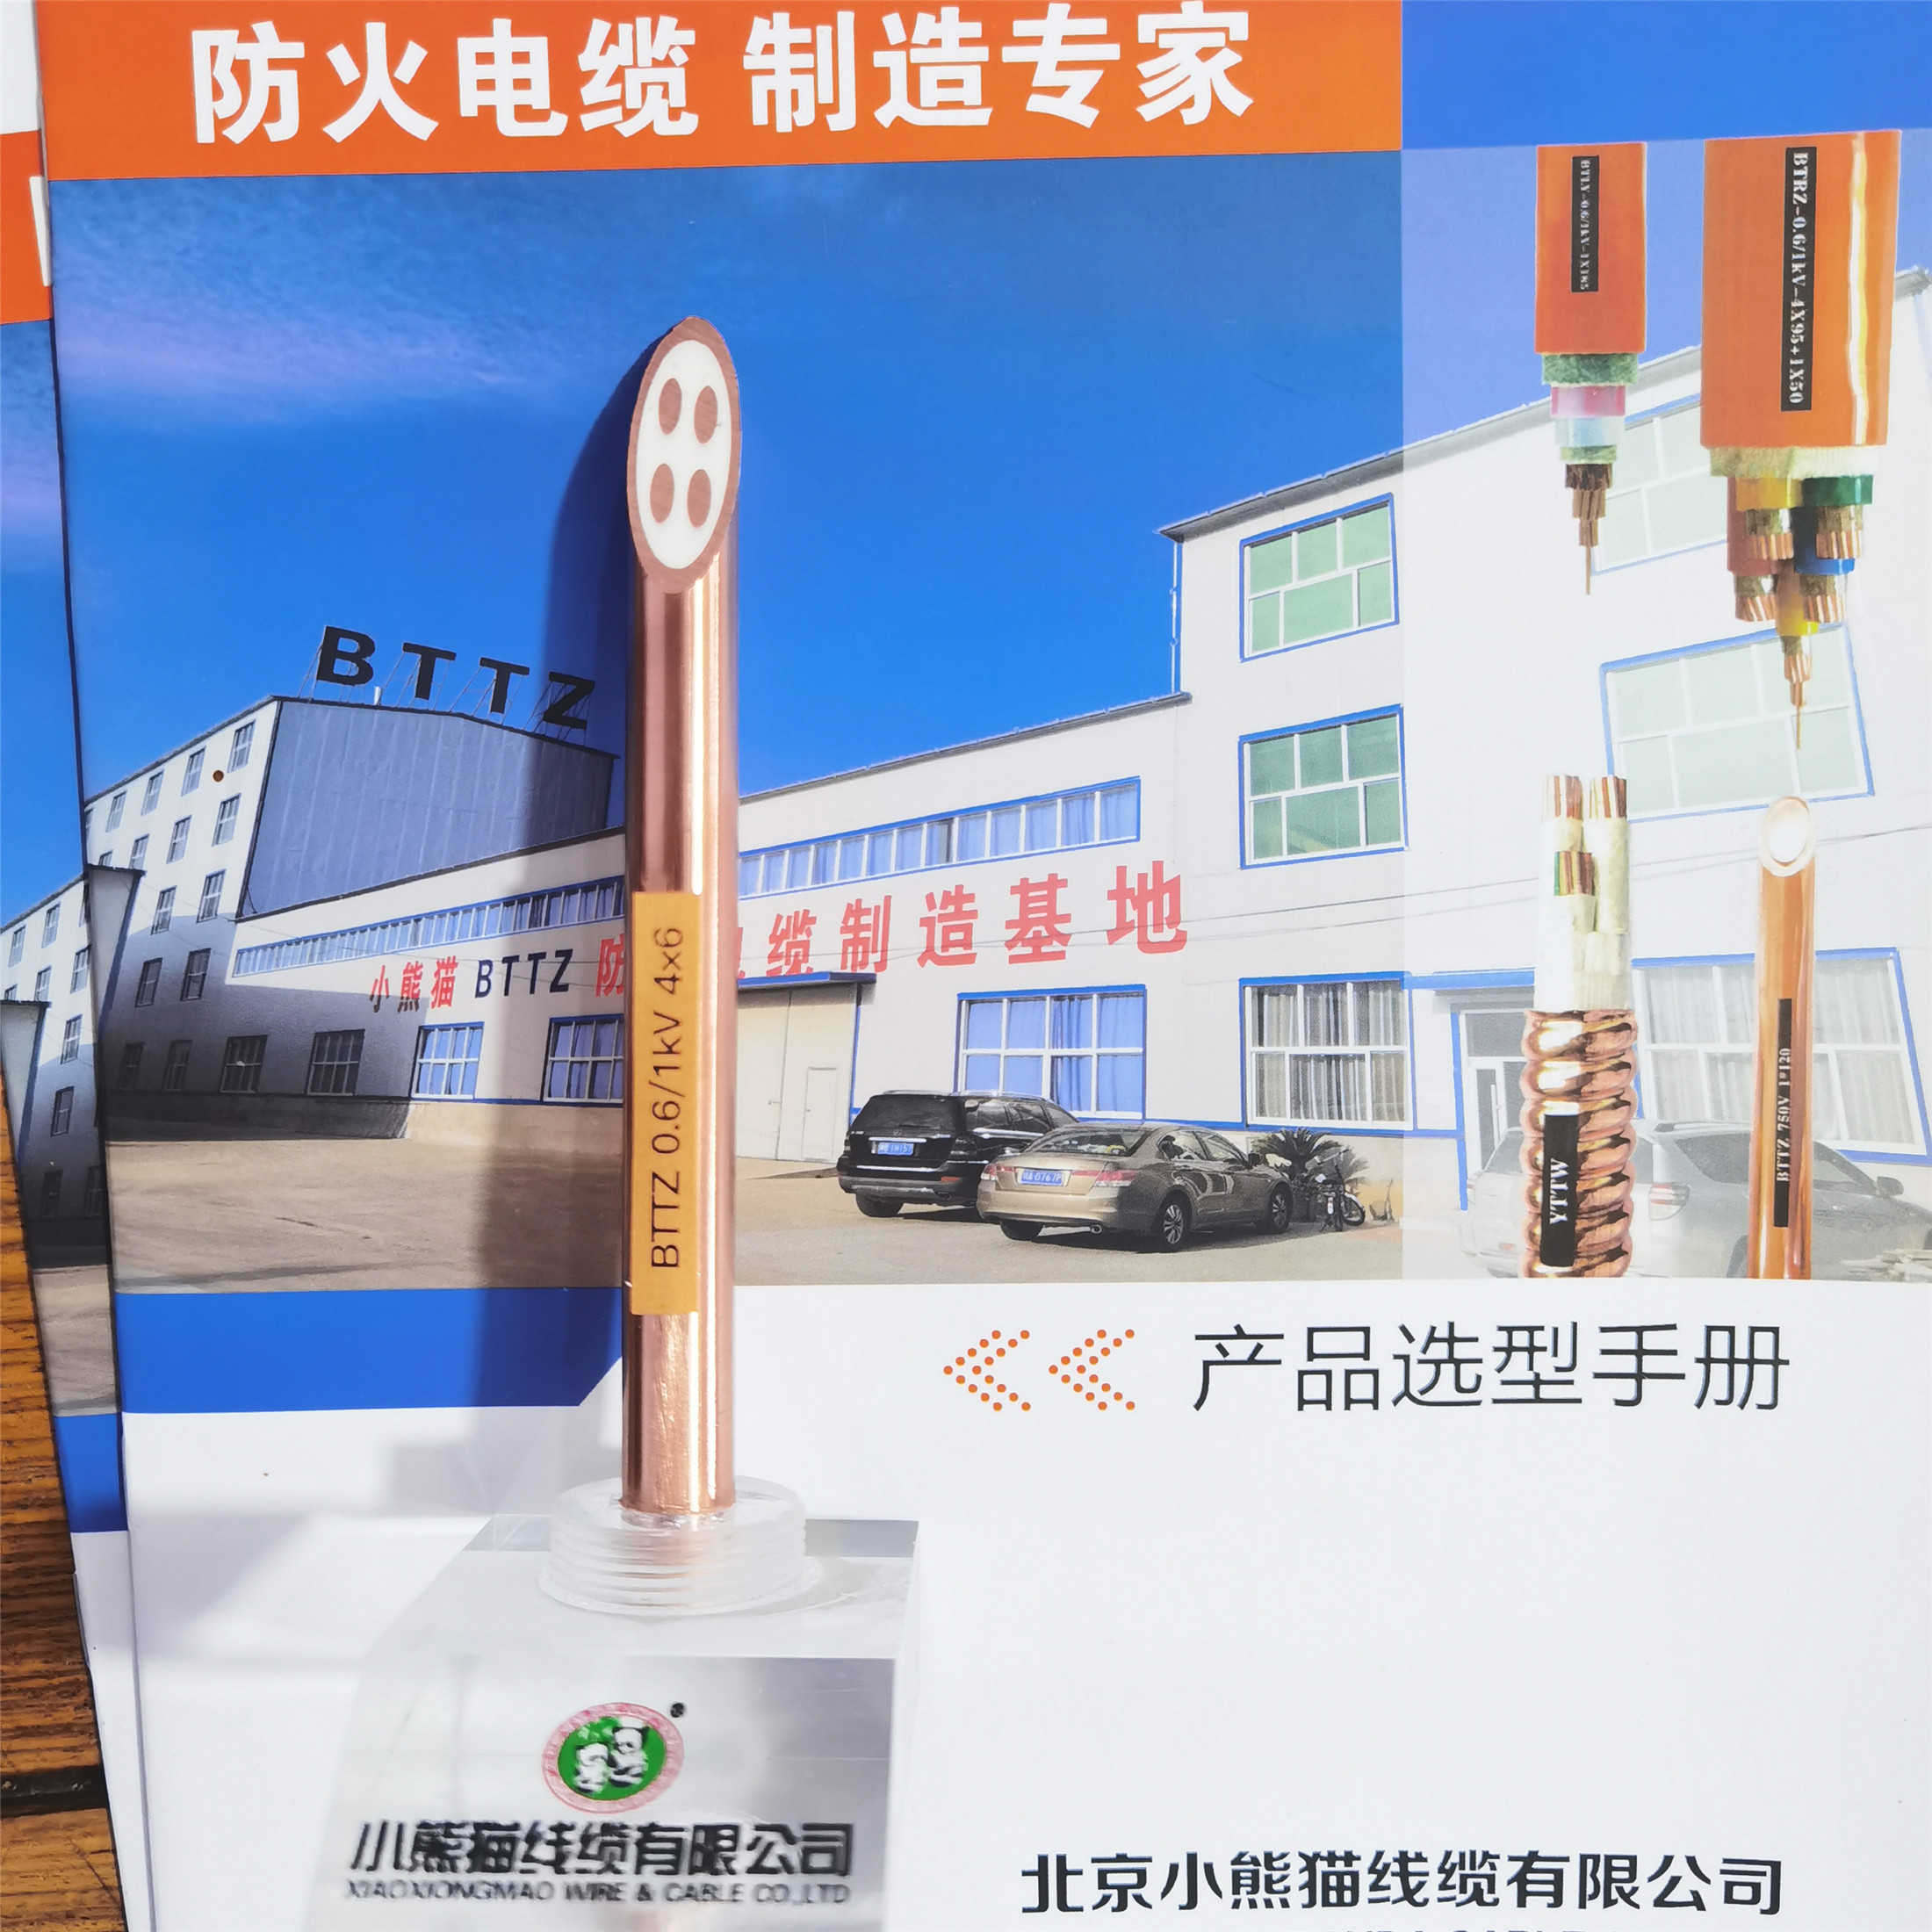 YTTWY，NG-A  ,BTLY廠家RTTZ  BTTZ  BBTRZ   BTTRZ倉儲批發礦物質防火電纜